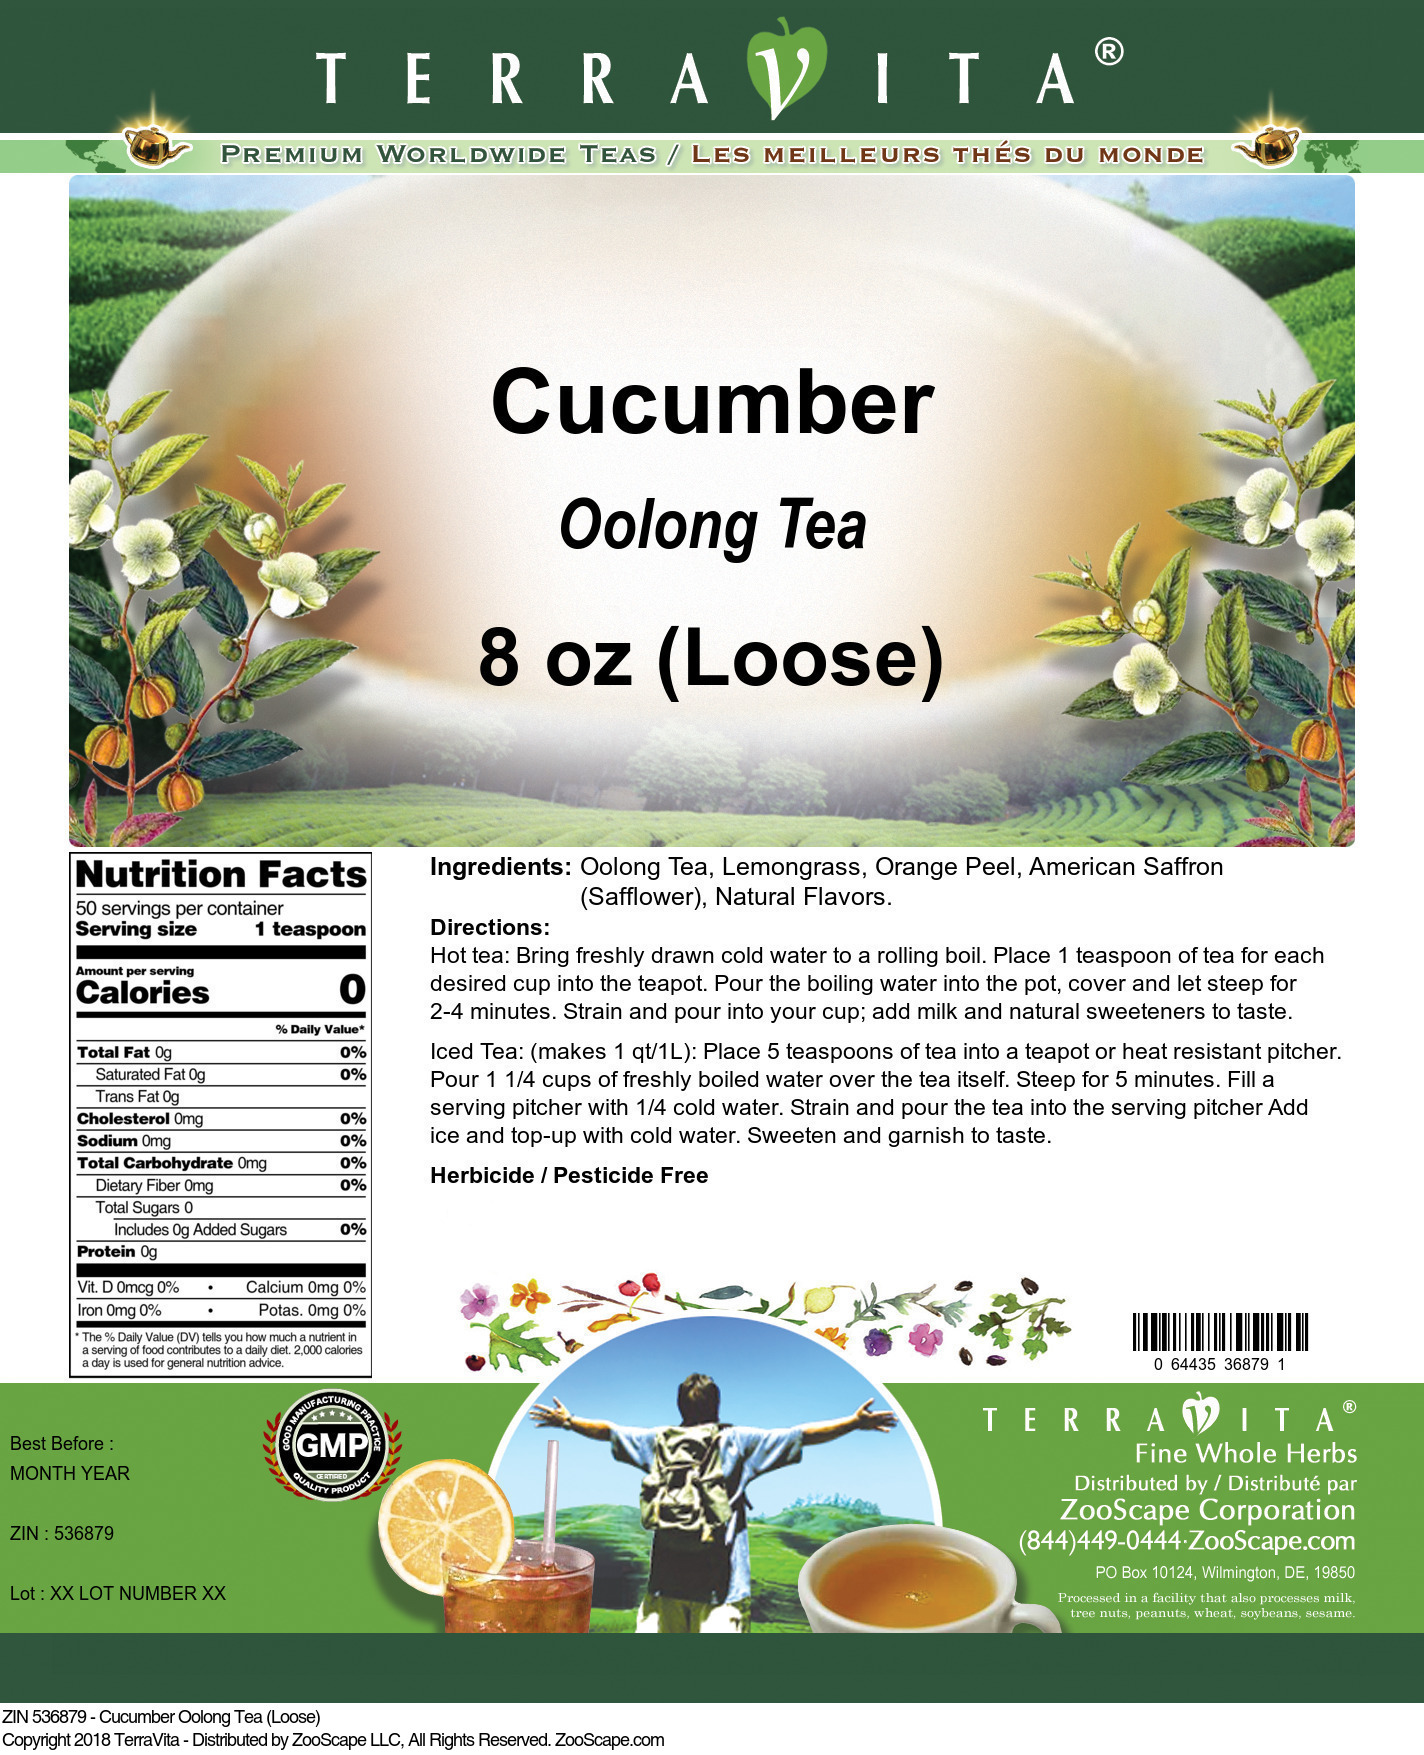 Cucumber Oolong Tea (Loose) - Label